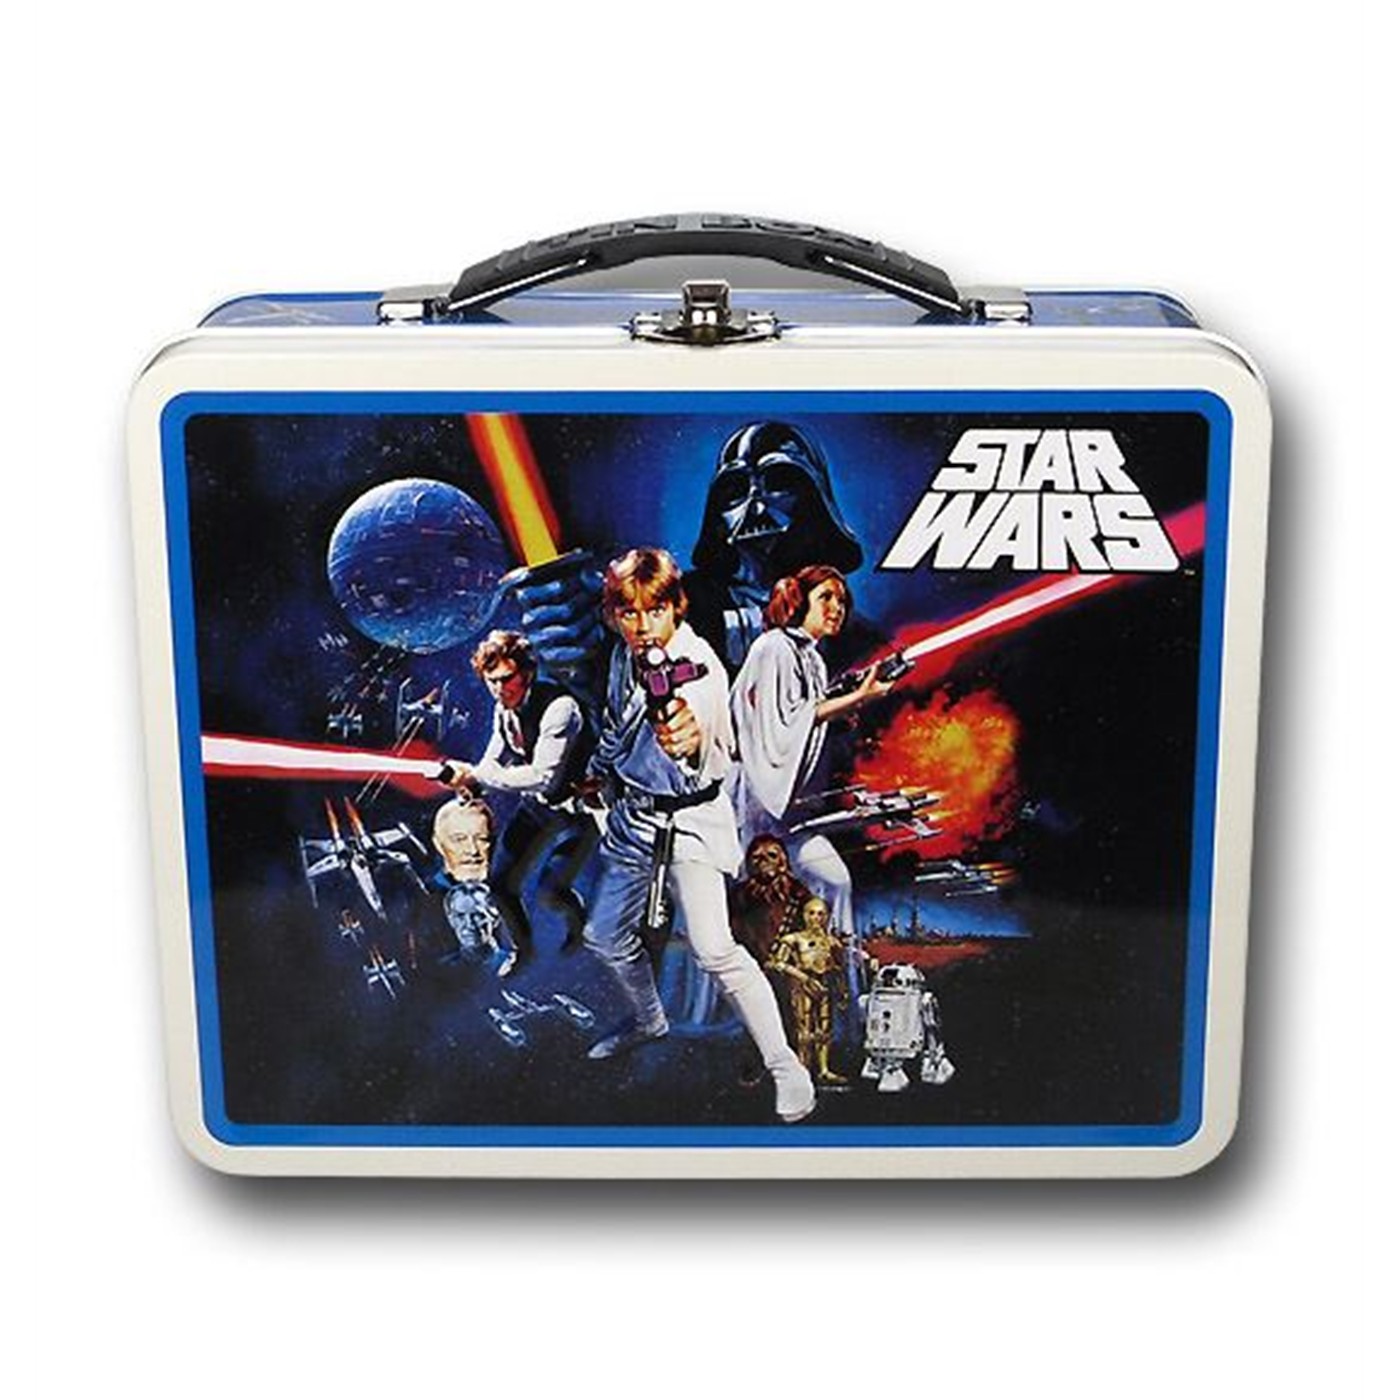 Star Wars New Hope Lunchbox